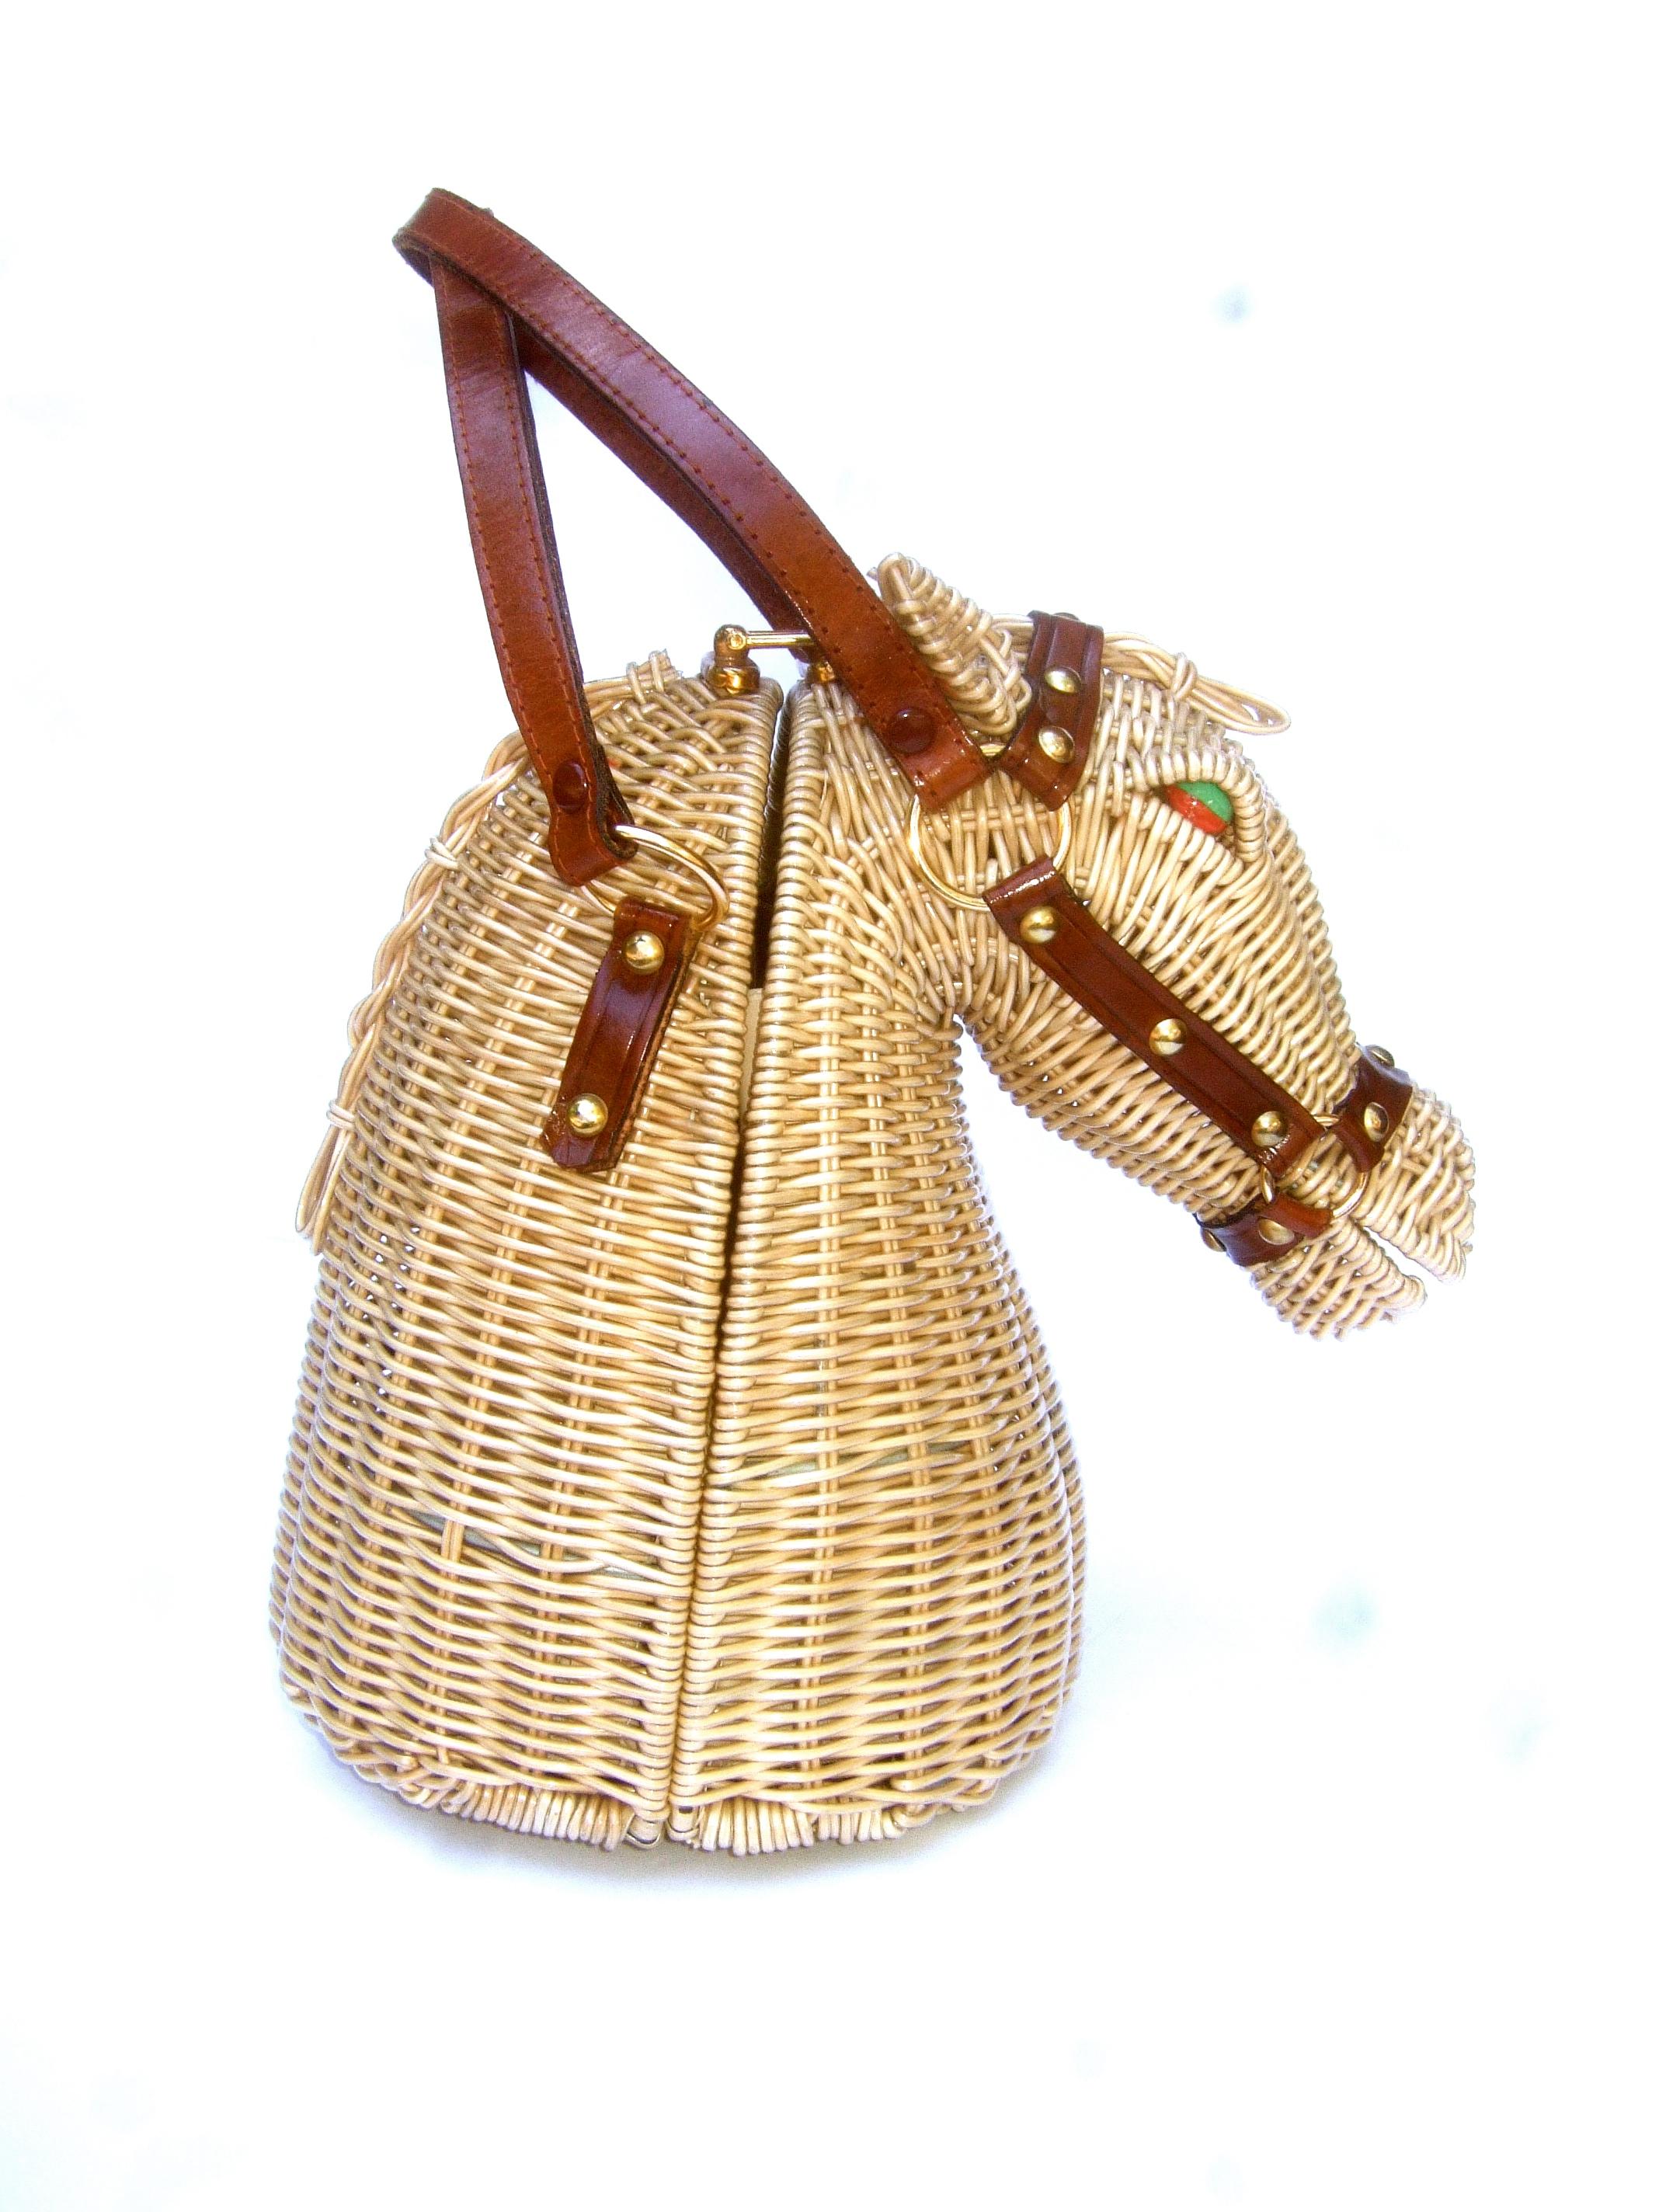 Extremely Rare Figural Wicker Artisan Horse Design Handbag c 1970 11